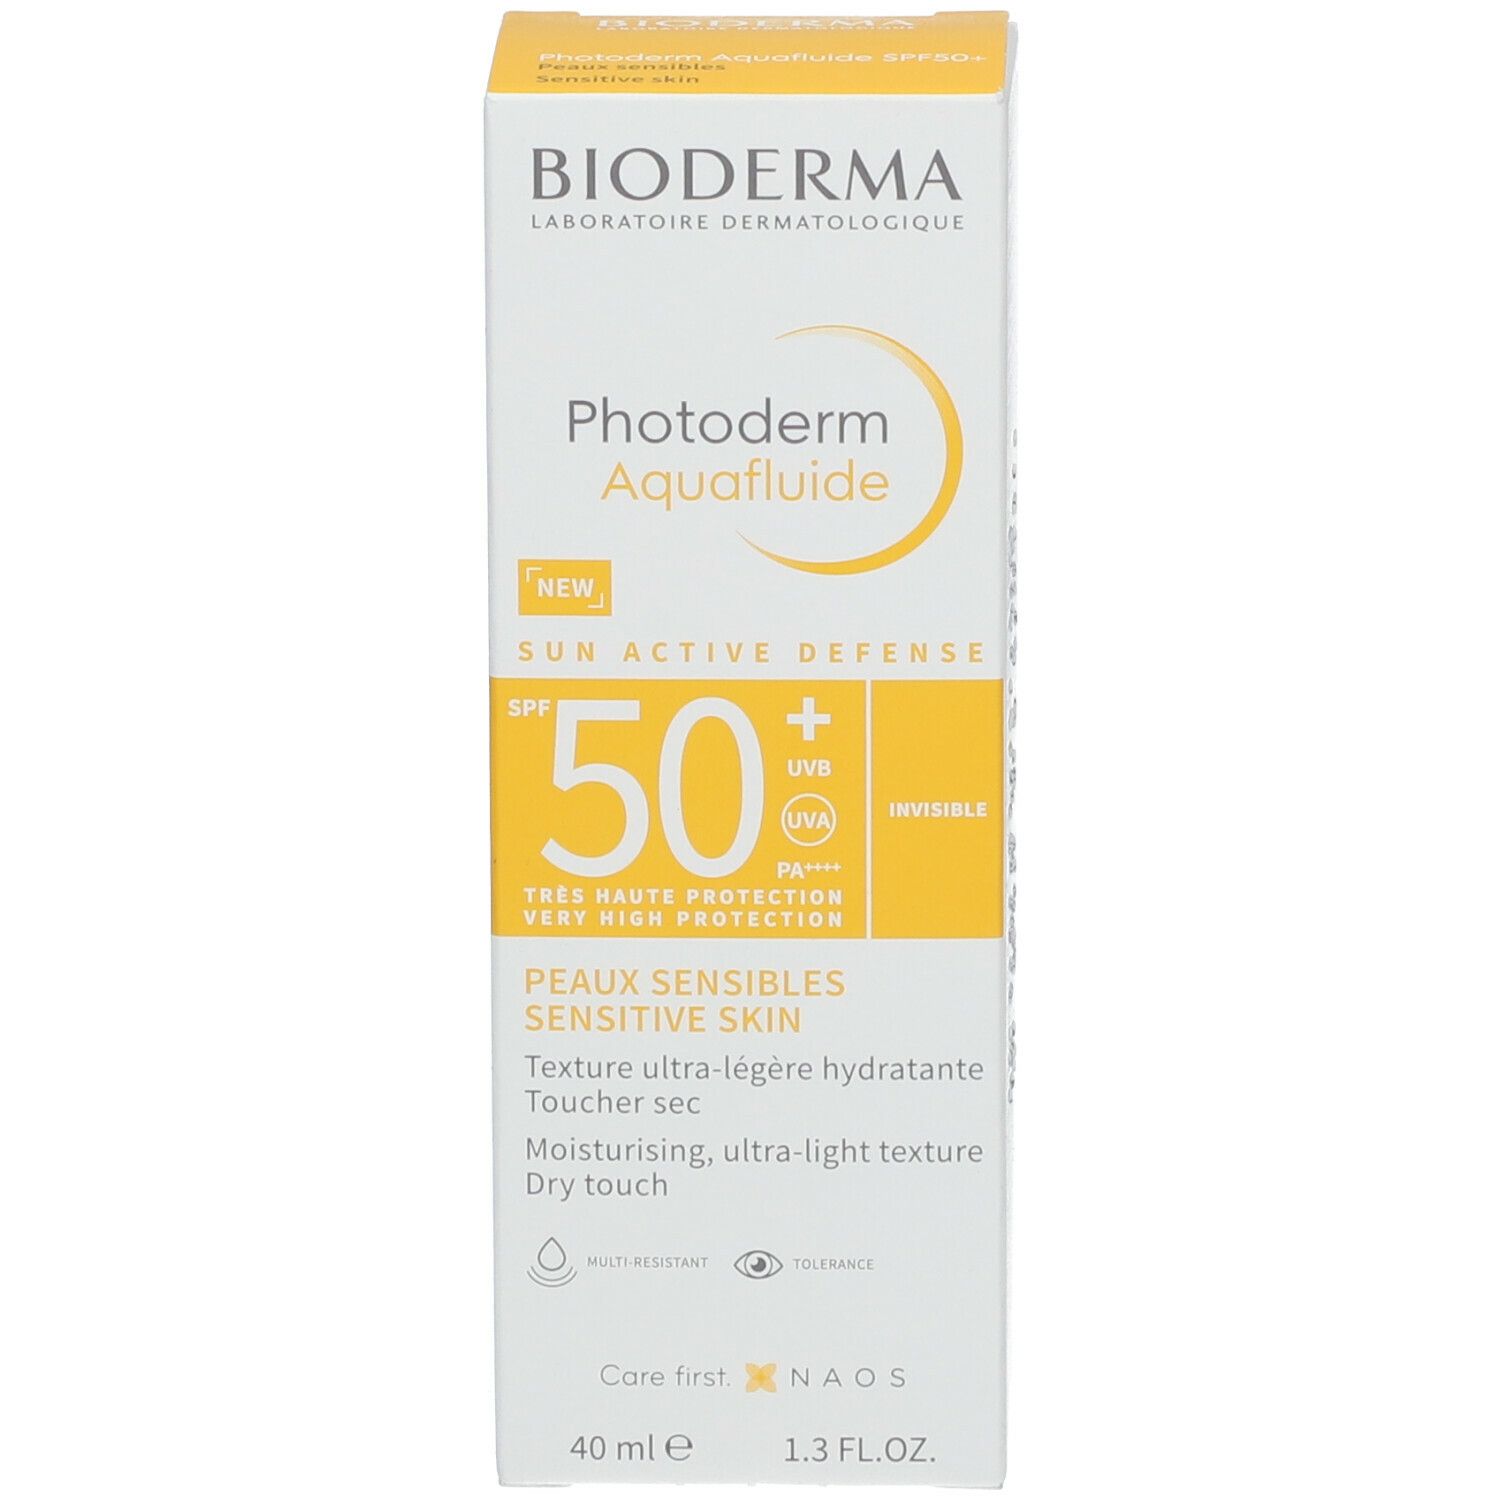 BIODERMA Photoderm Aquafluide 50+